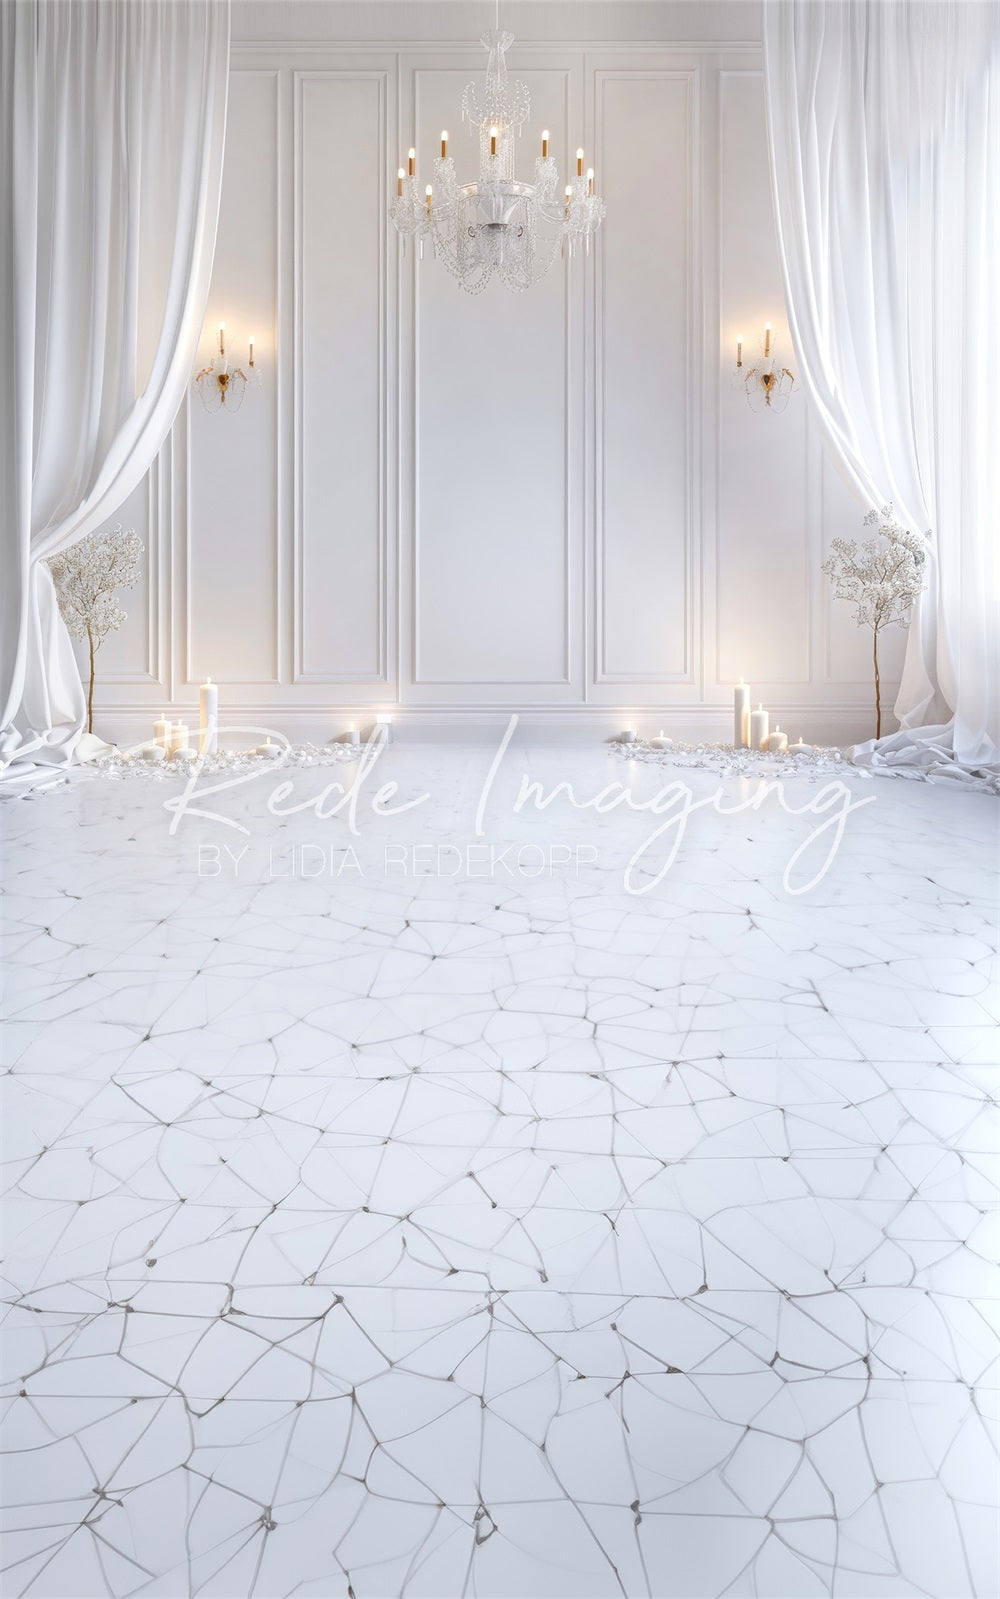 Sweep Retro Elegant White Curtain and Chandelier Backdrop Ontworpen door Lidia Redekopp